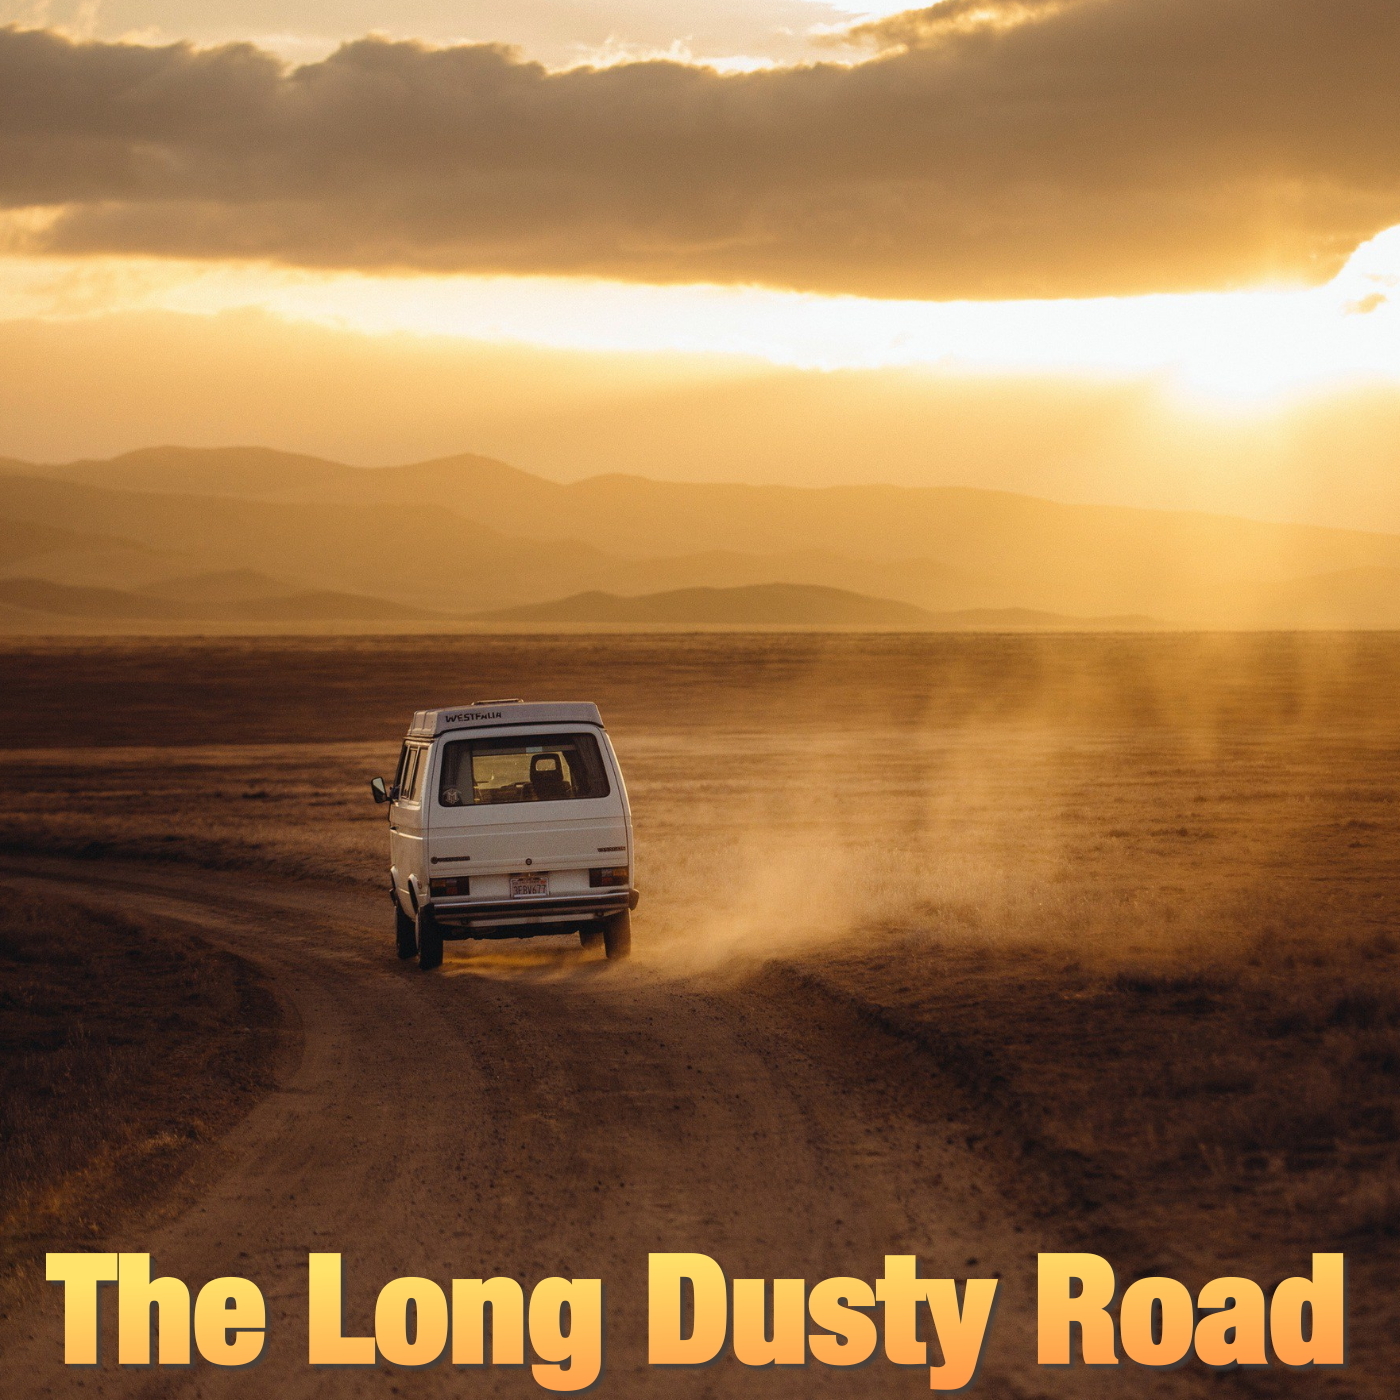 The Long Dusty Road